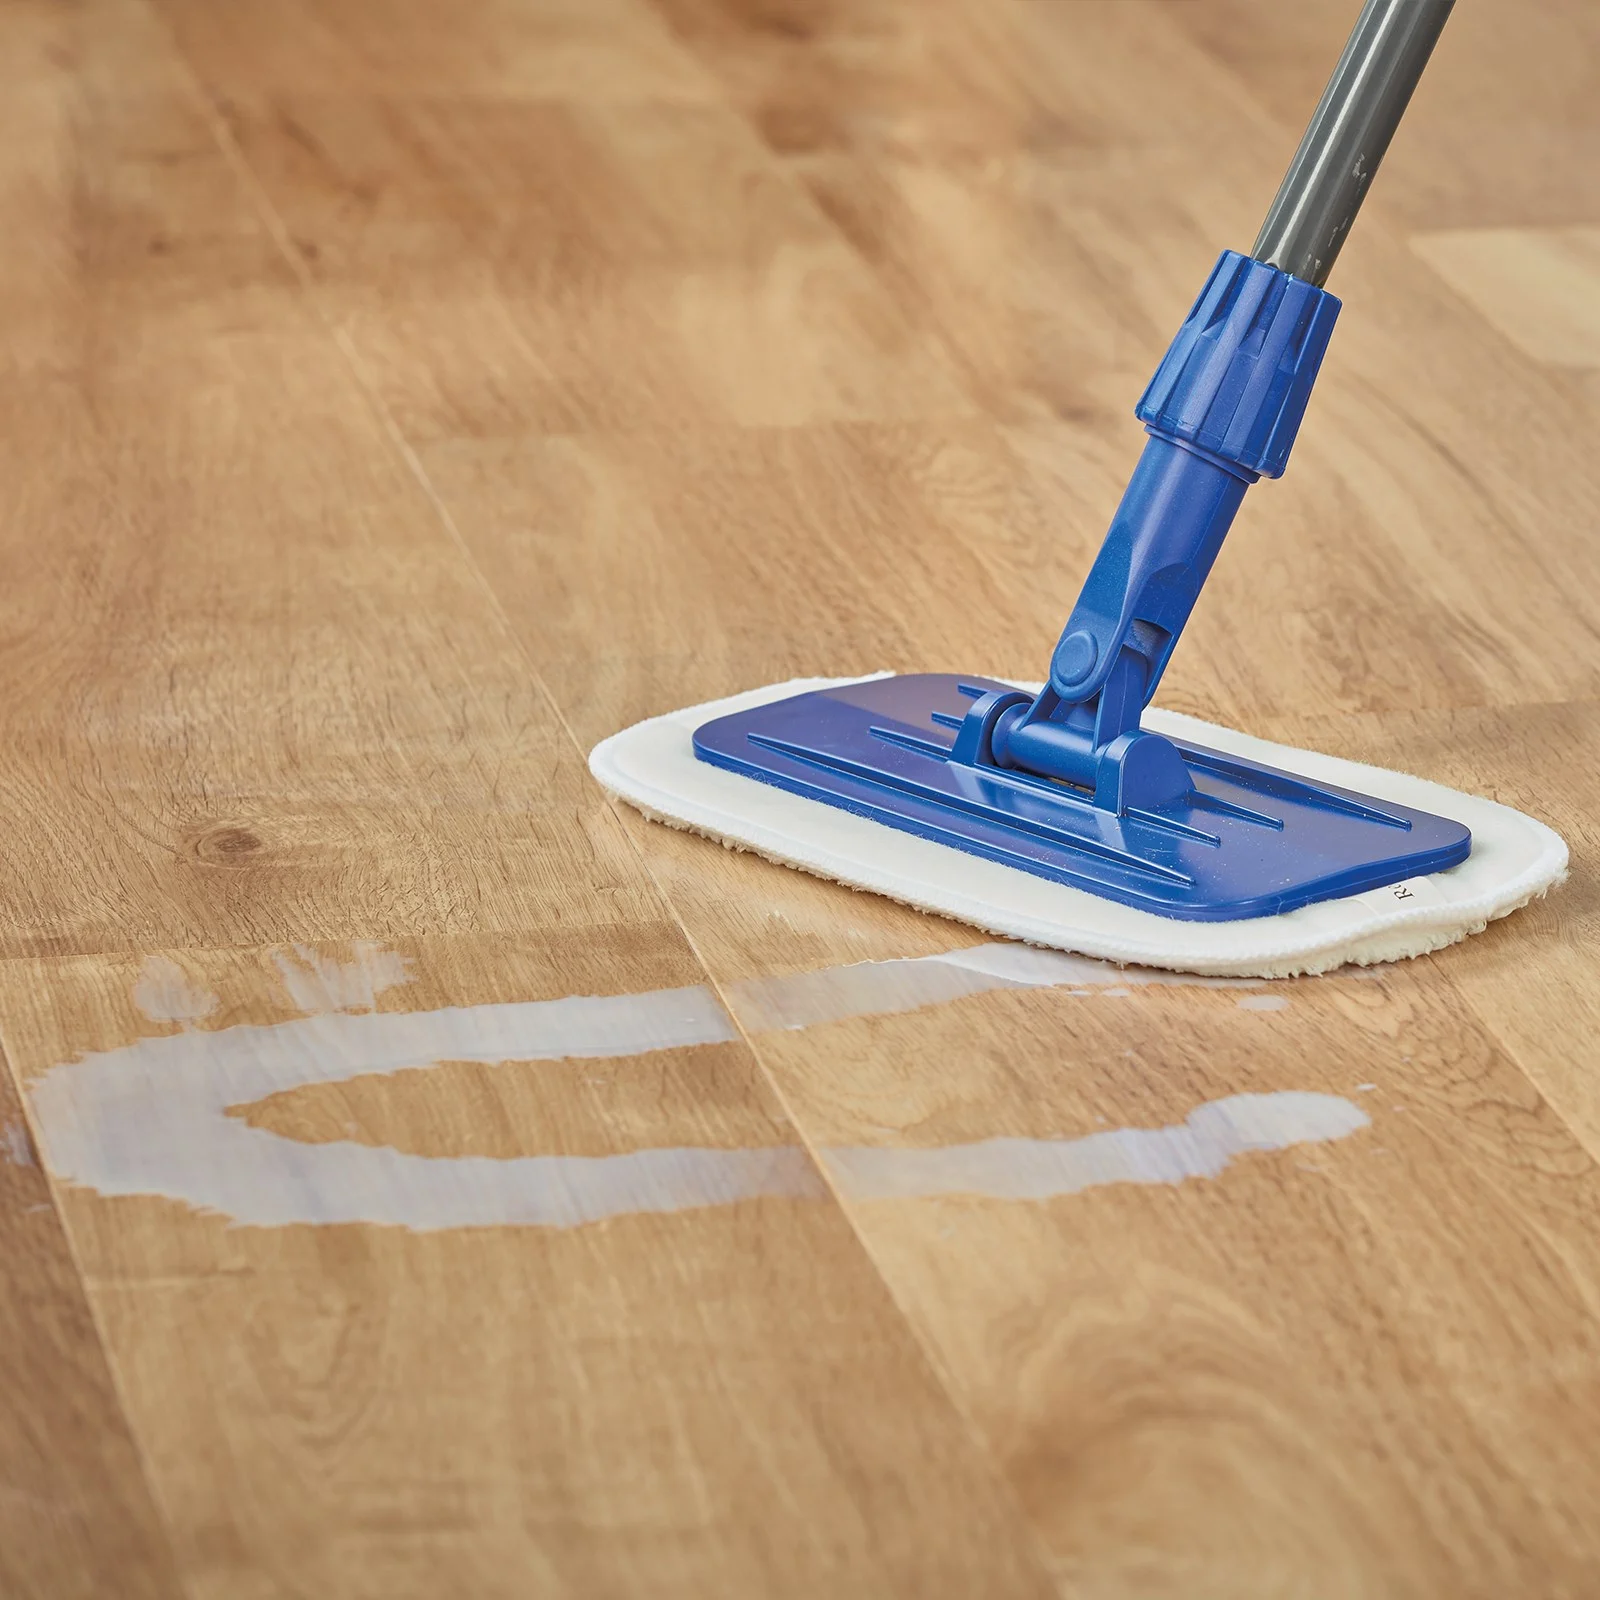 Best Ways To Clean LVT Floors